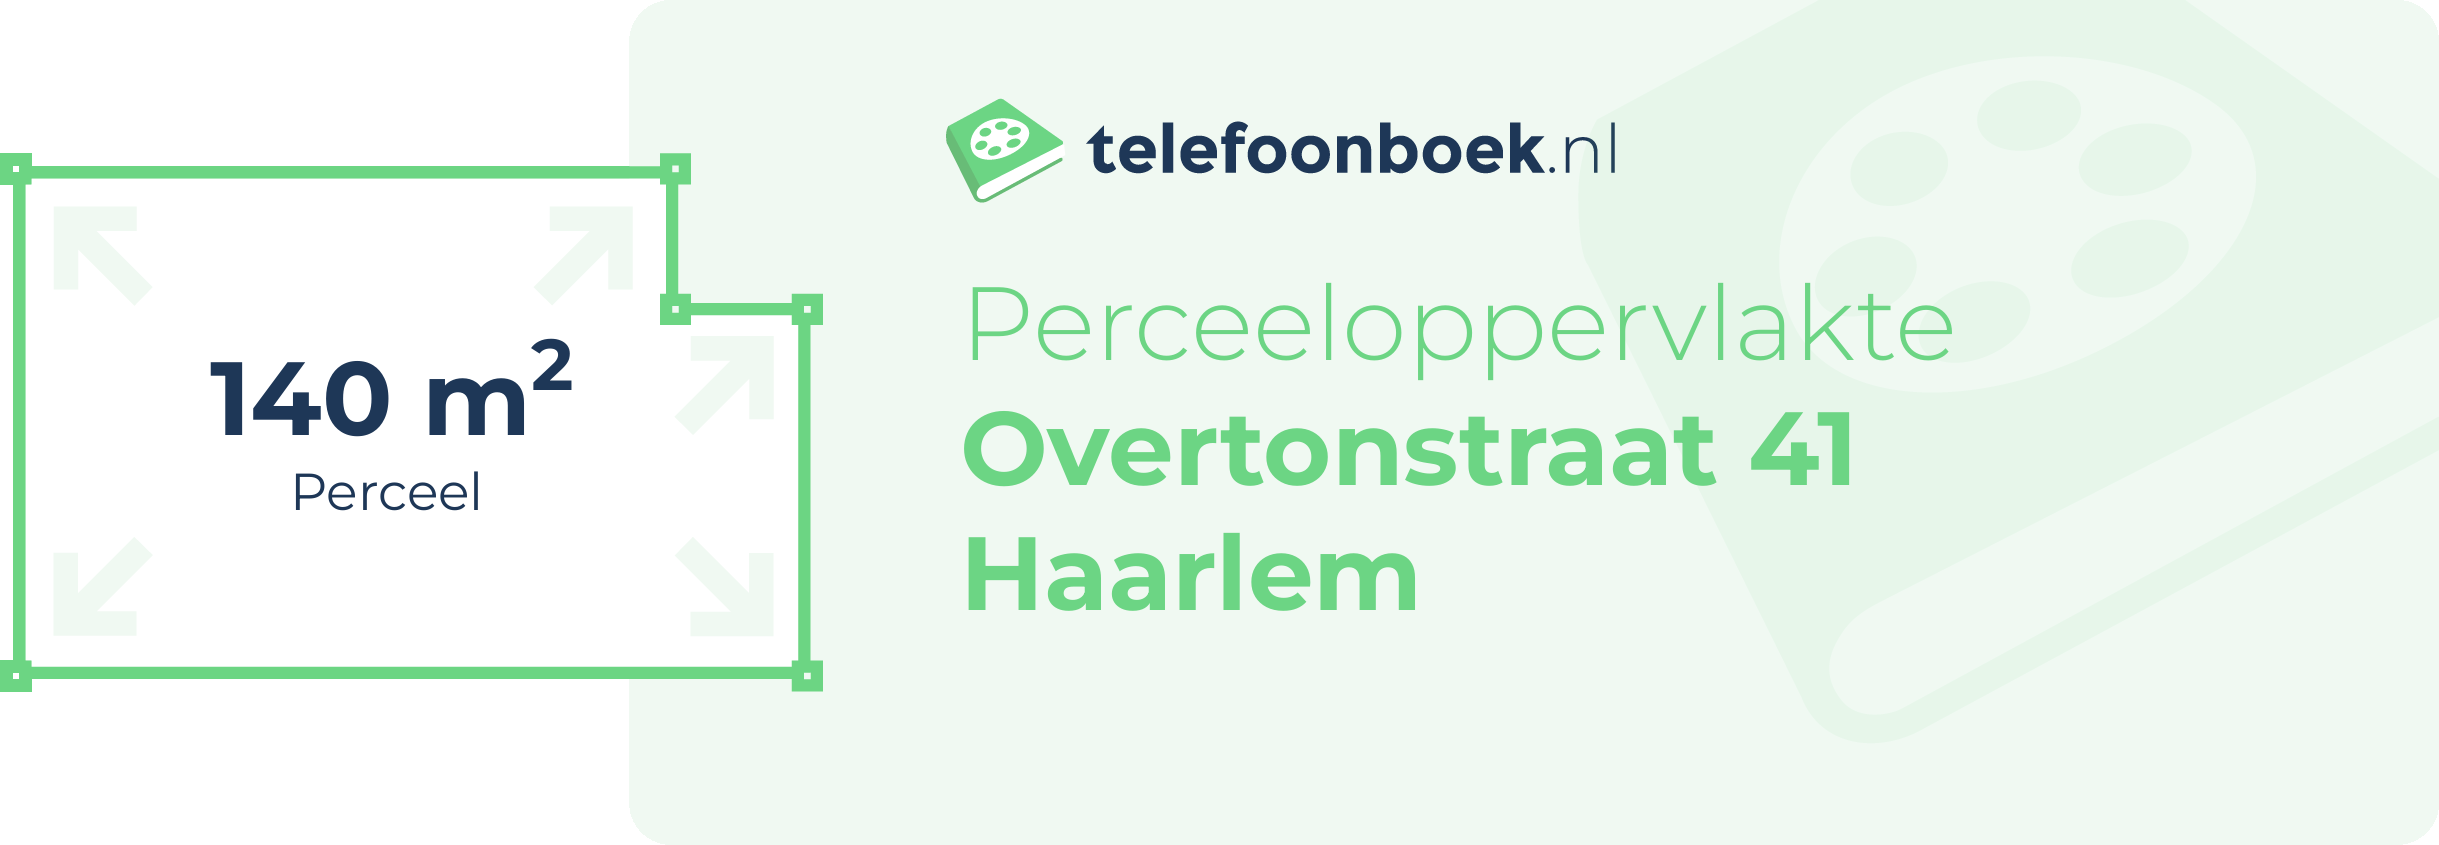 Perceeloppervlakte Overtonstraat 41 Haarlem